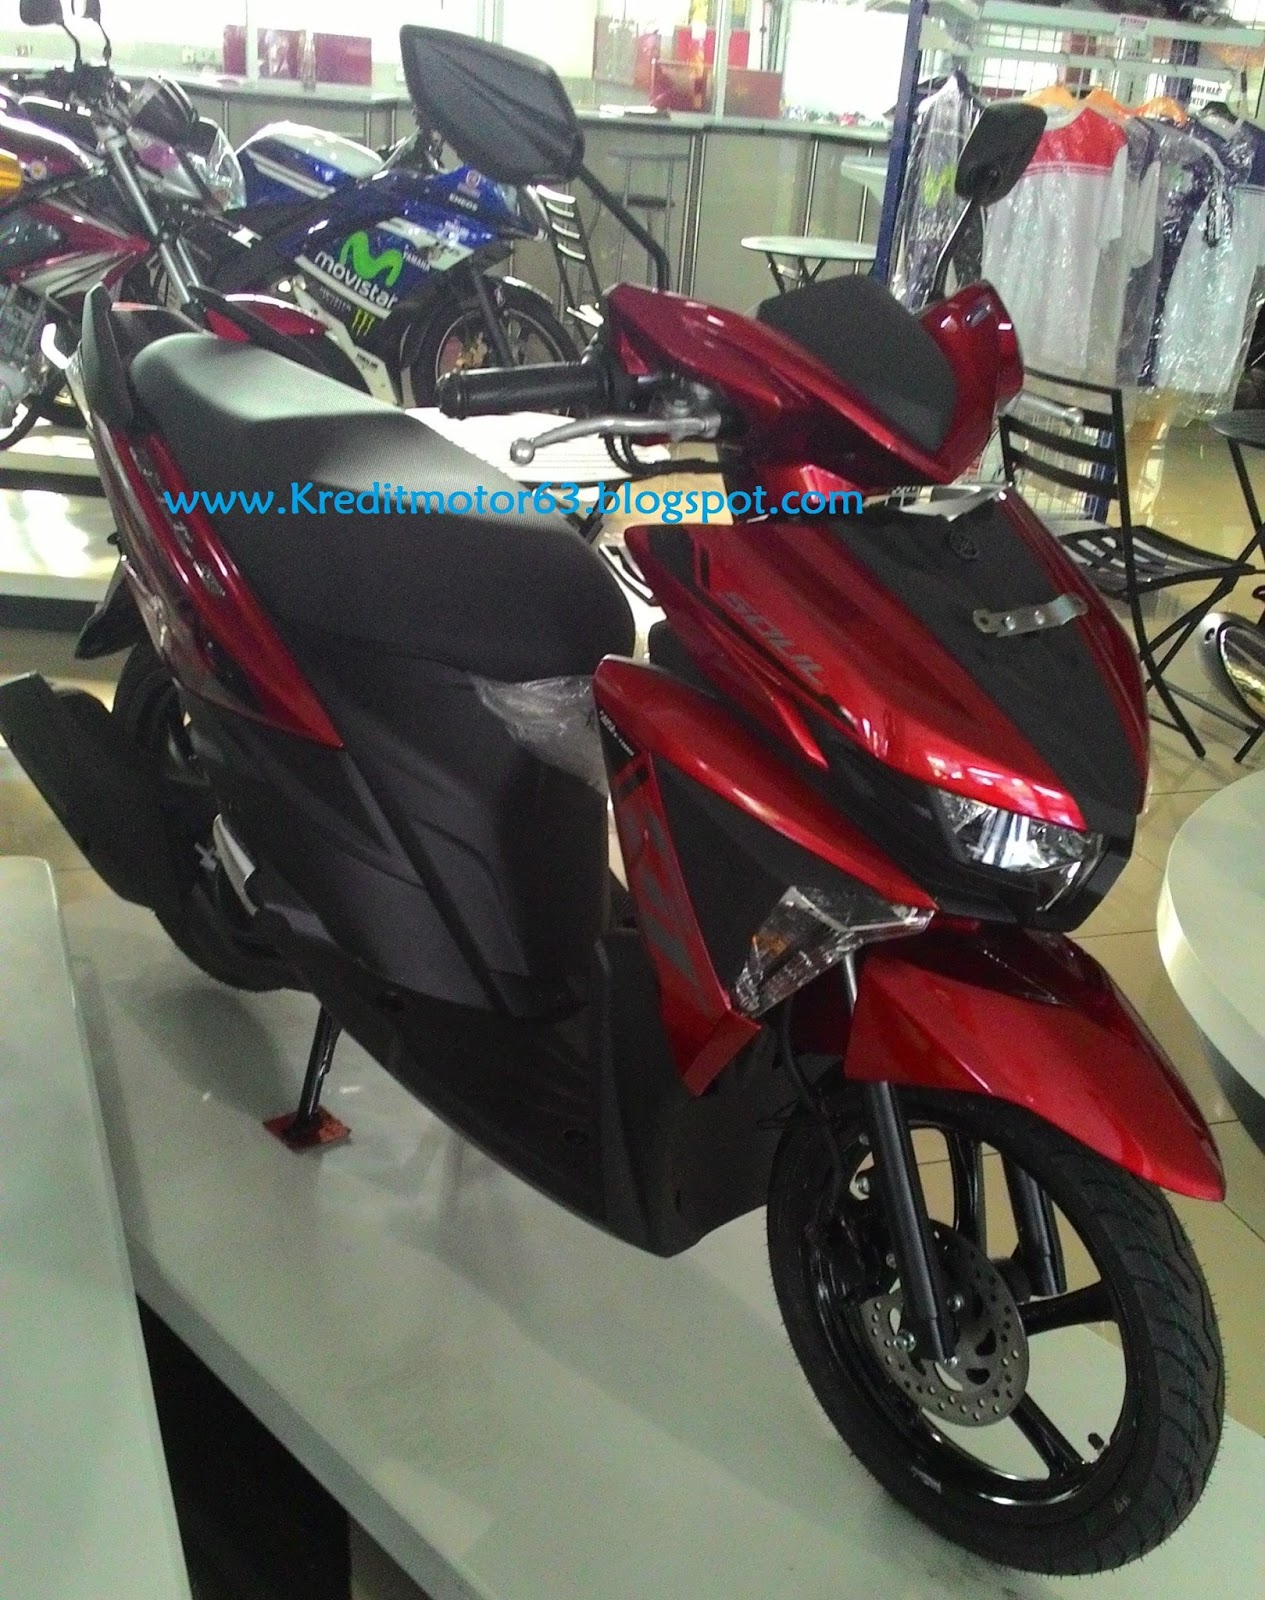 Kredit Yamaha Gt 125 Jakarta KOLEKSI MOTOR GAUL MODIFIKASI